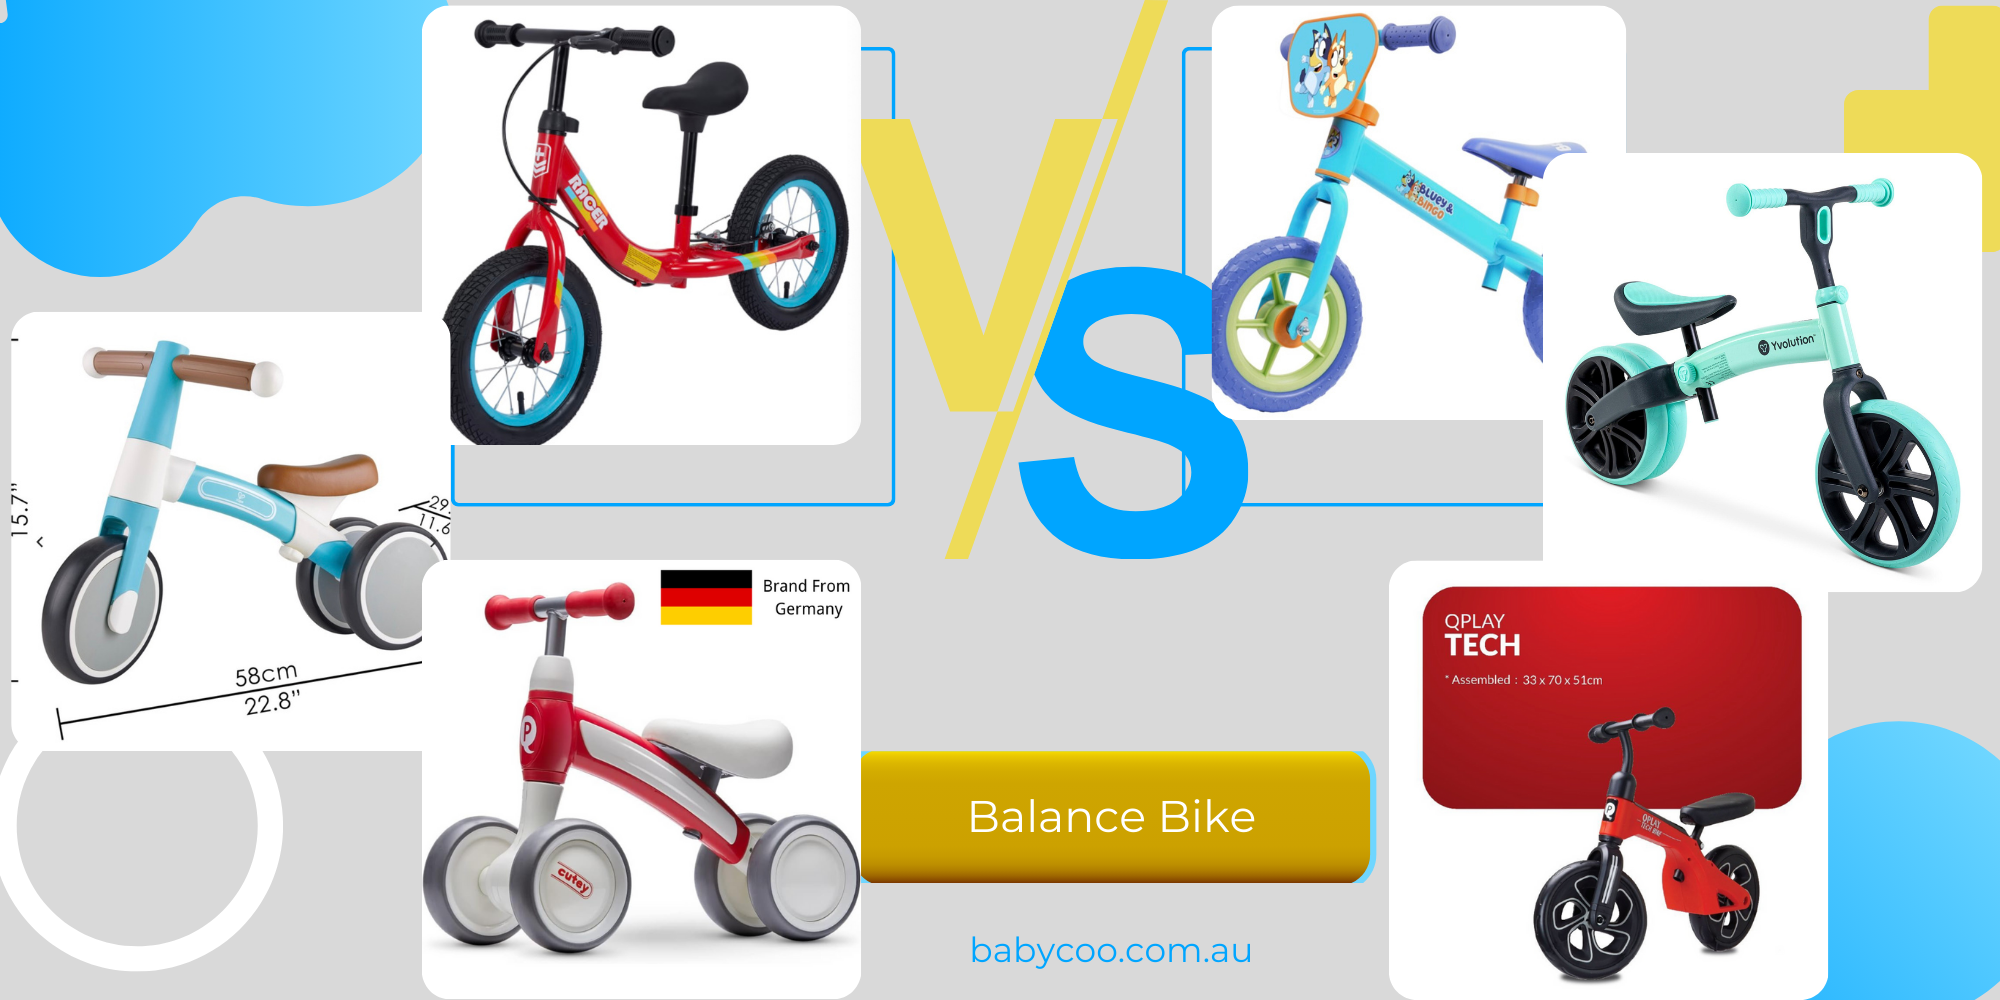 Kmart Balance Bike Vs Big-W Vs Babycoo